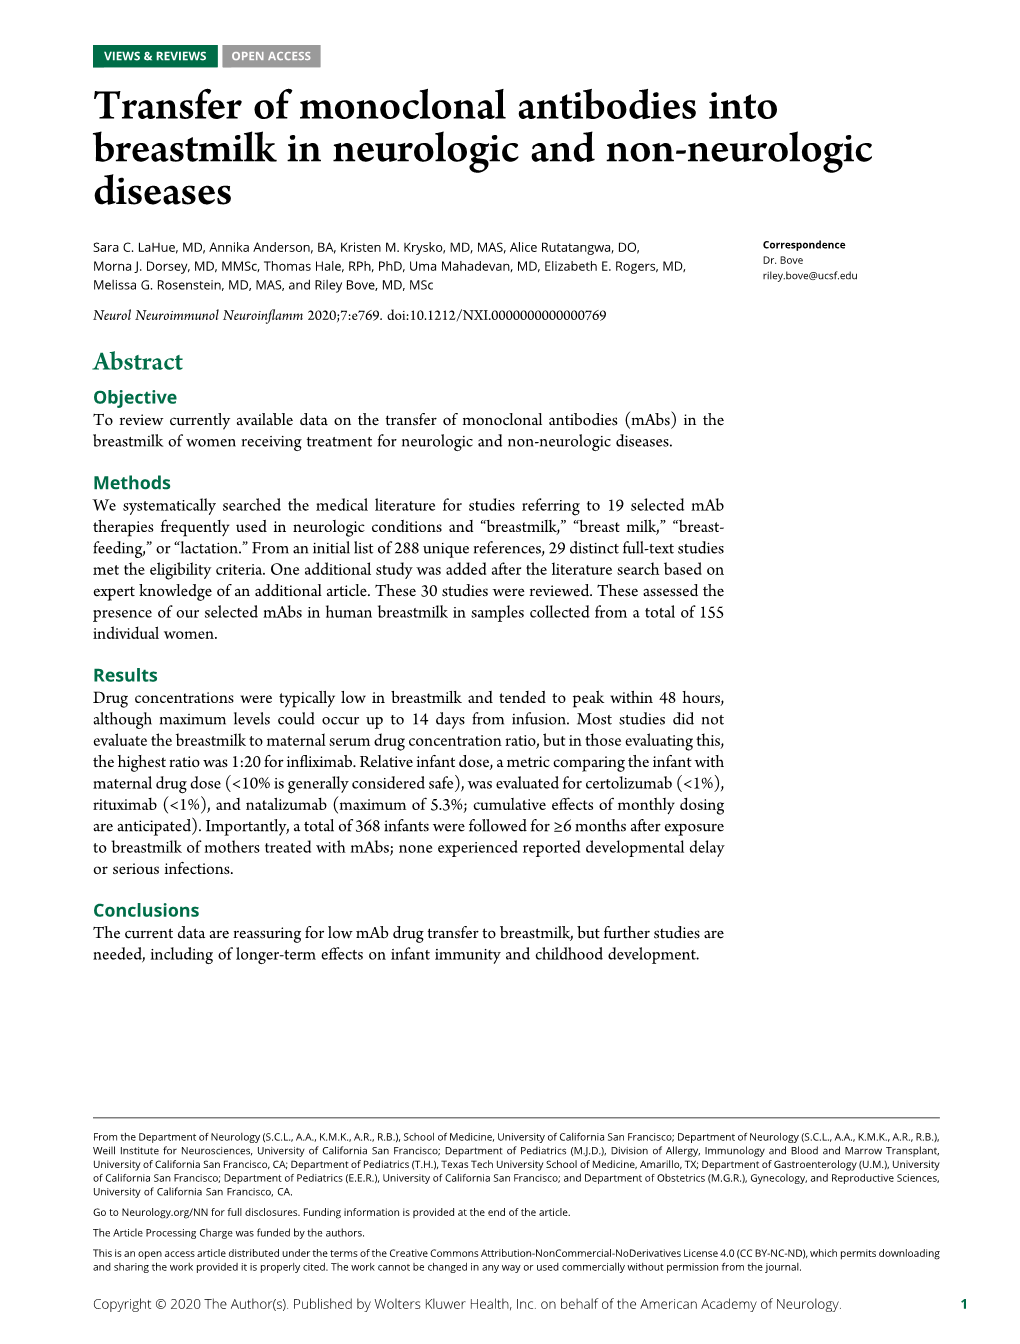 Transfer of Monoclonal Antibodies Into Breastmilk in Neurologic and Non-Neurologic Diseases